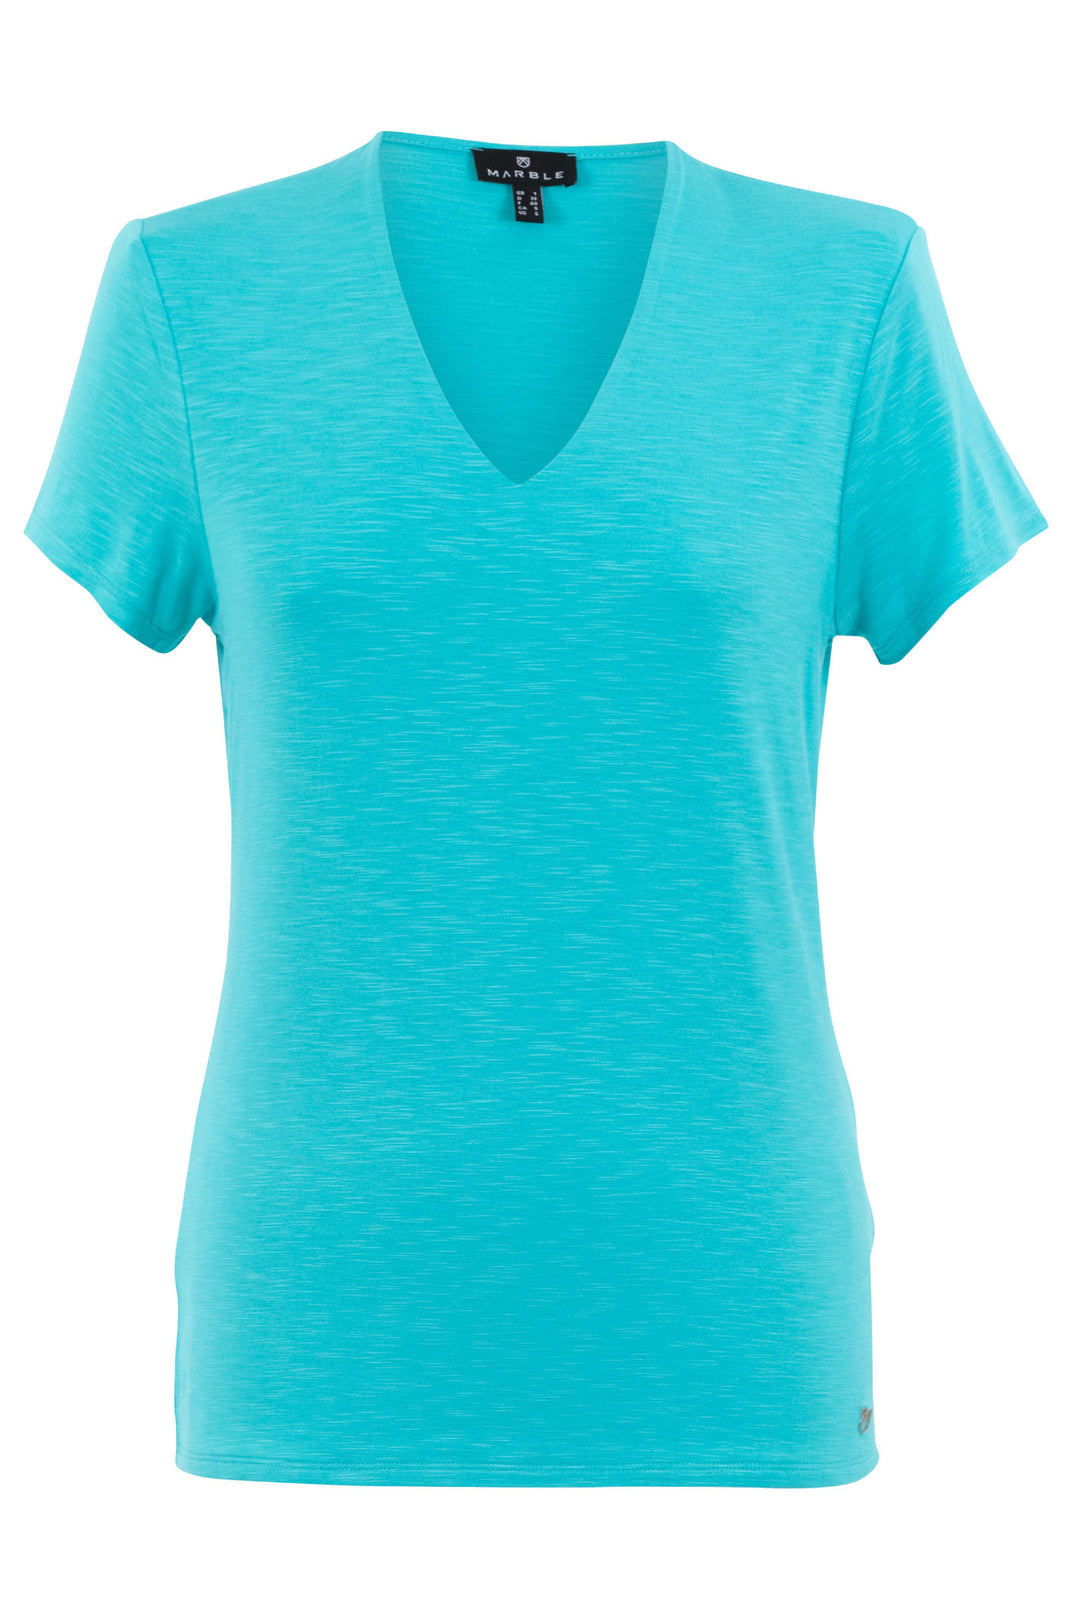 Marble 6539 151 Turquoise Blue V-Neck T-Shirt Top - Dotique